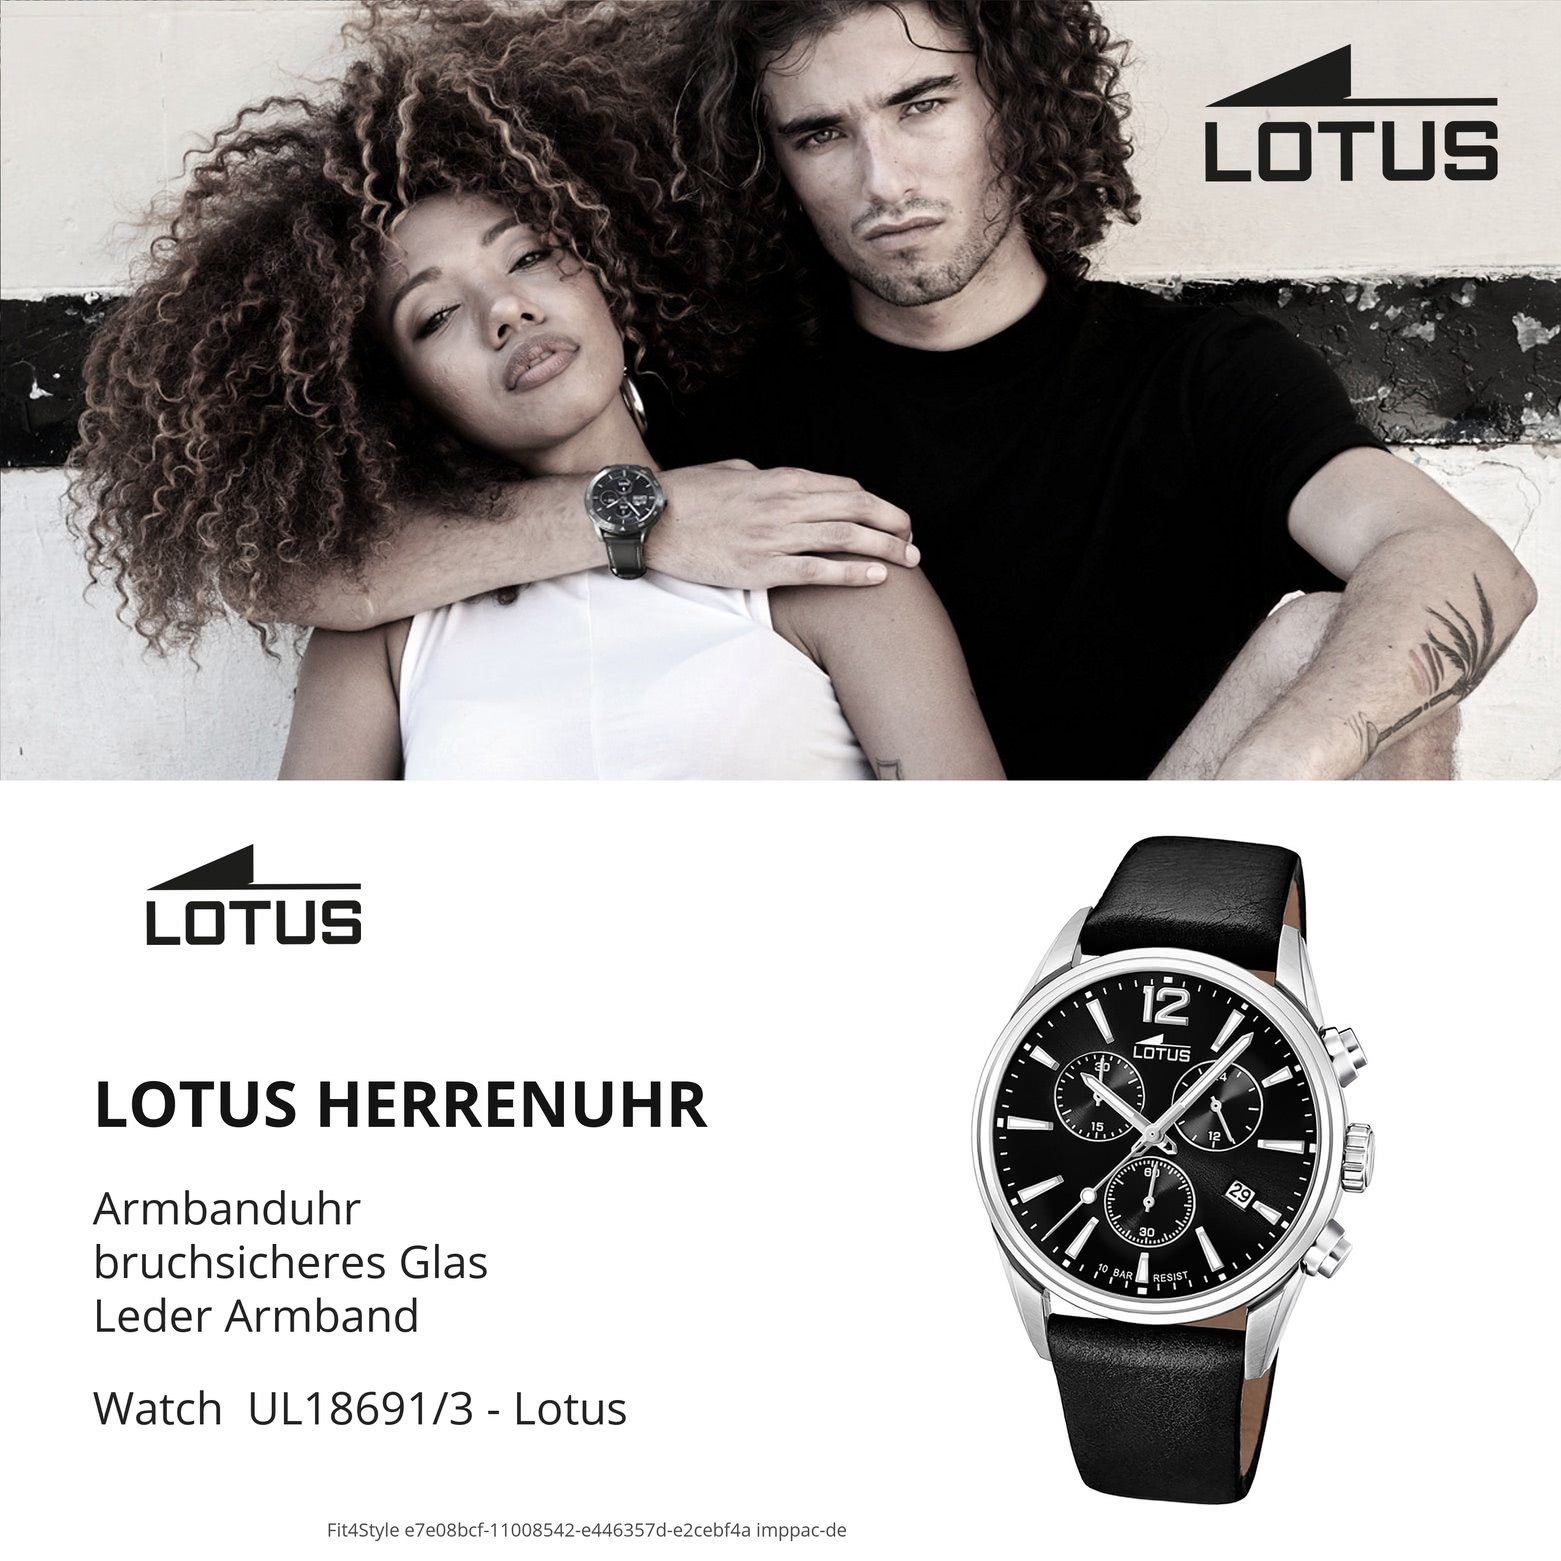 Herren Uhren Lotus Quarzuhr UL18691/3 LOTUS Herren Uhr Sport 18691/3 Leder, Herren Armbanduhr rund, groß (ca. 42mm), Lederarmban